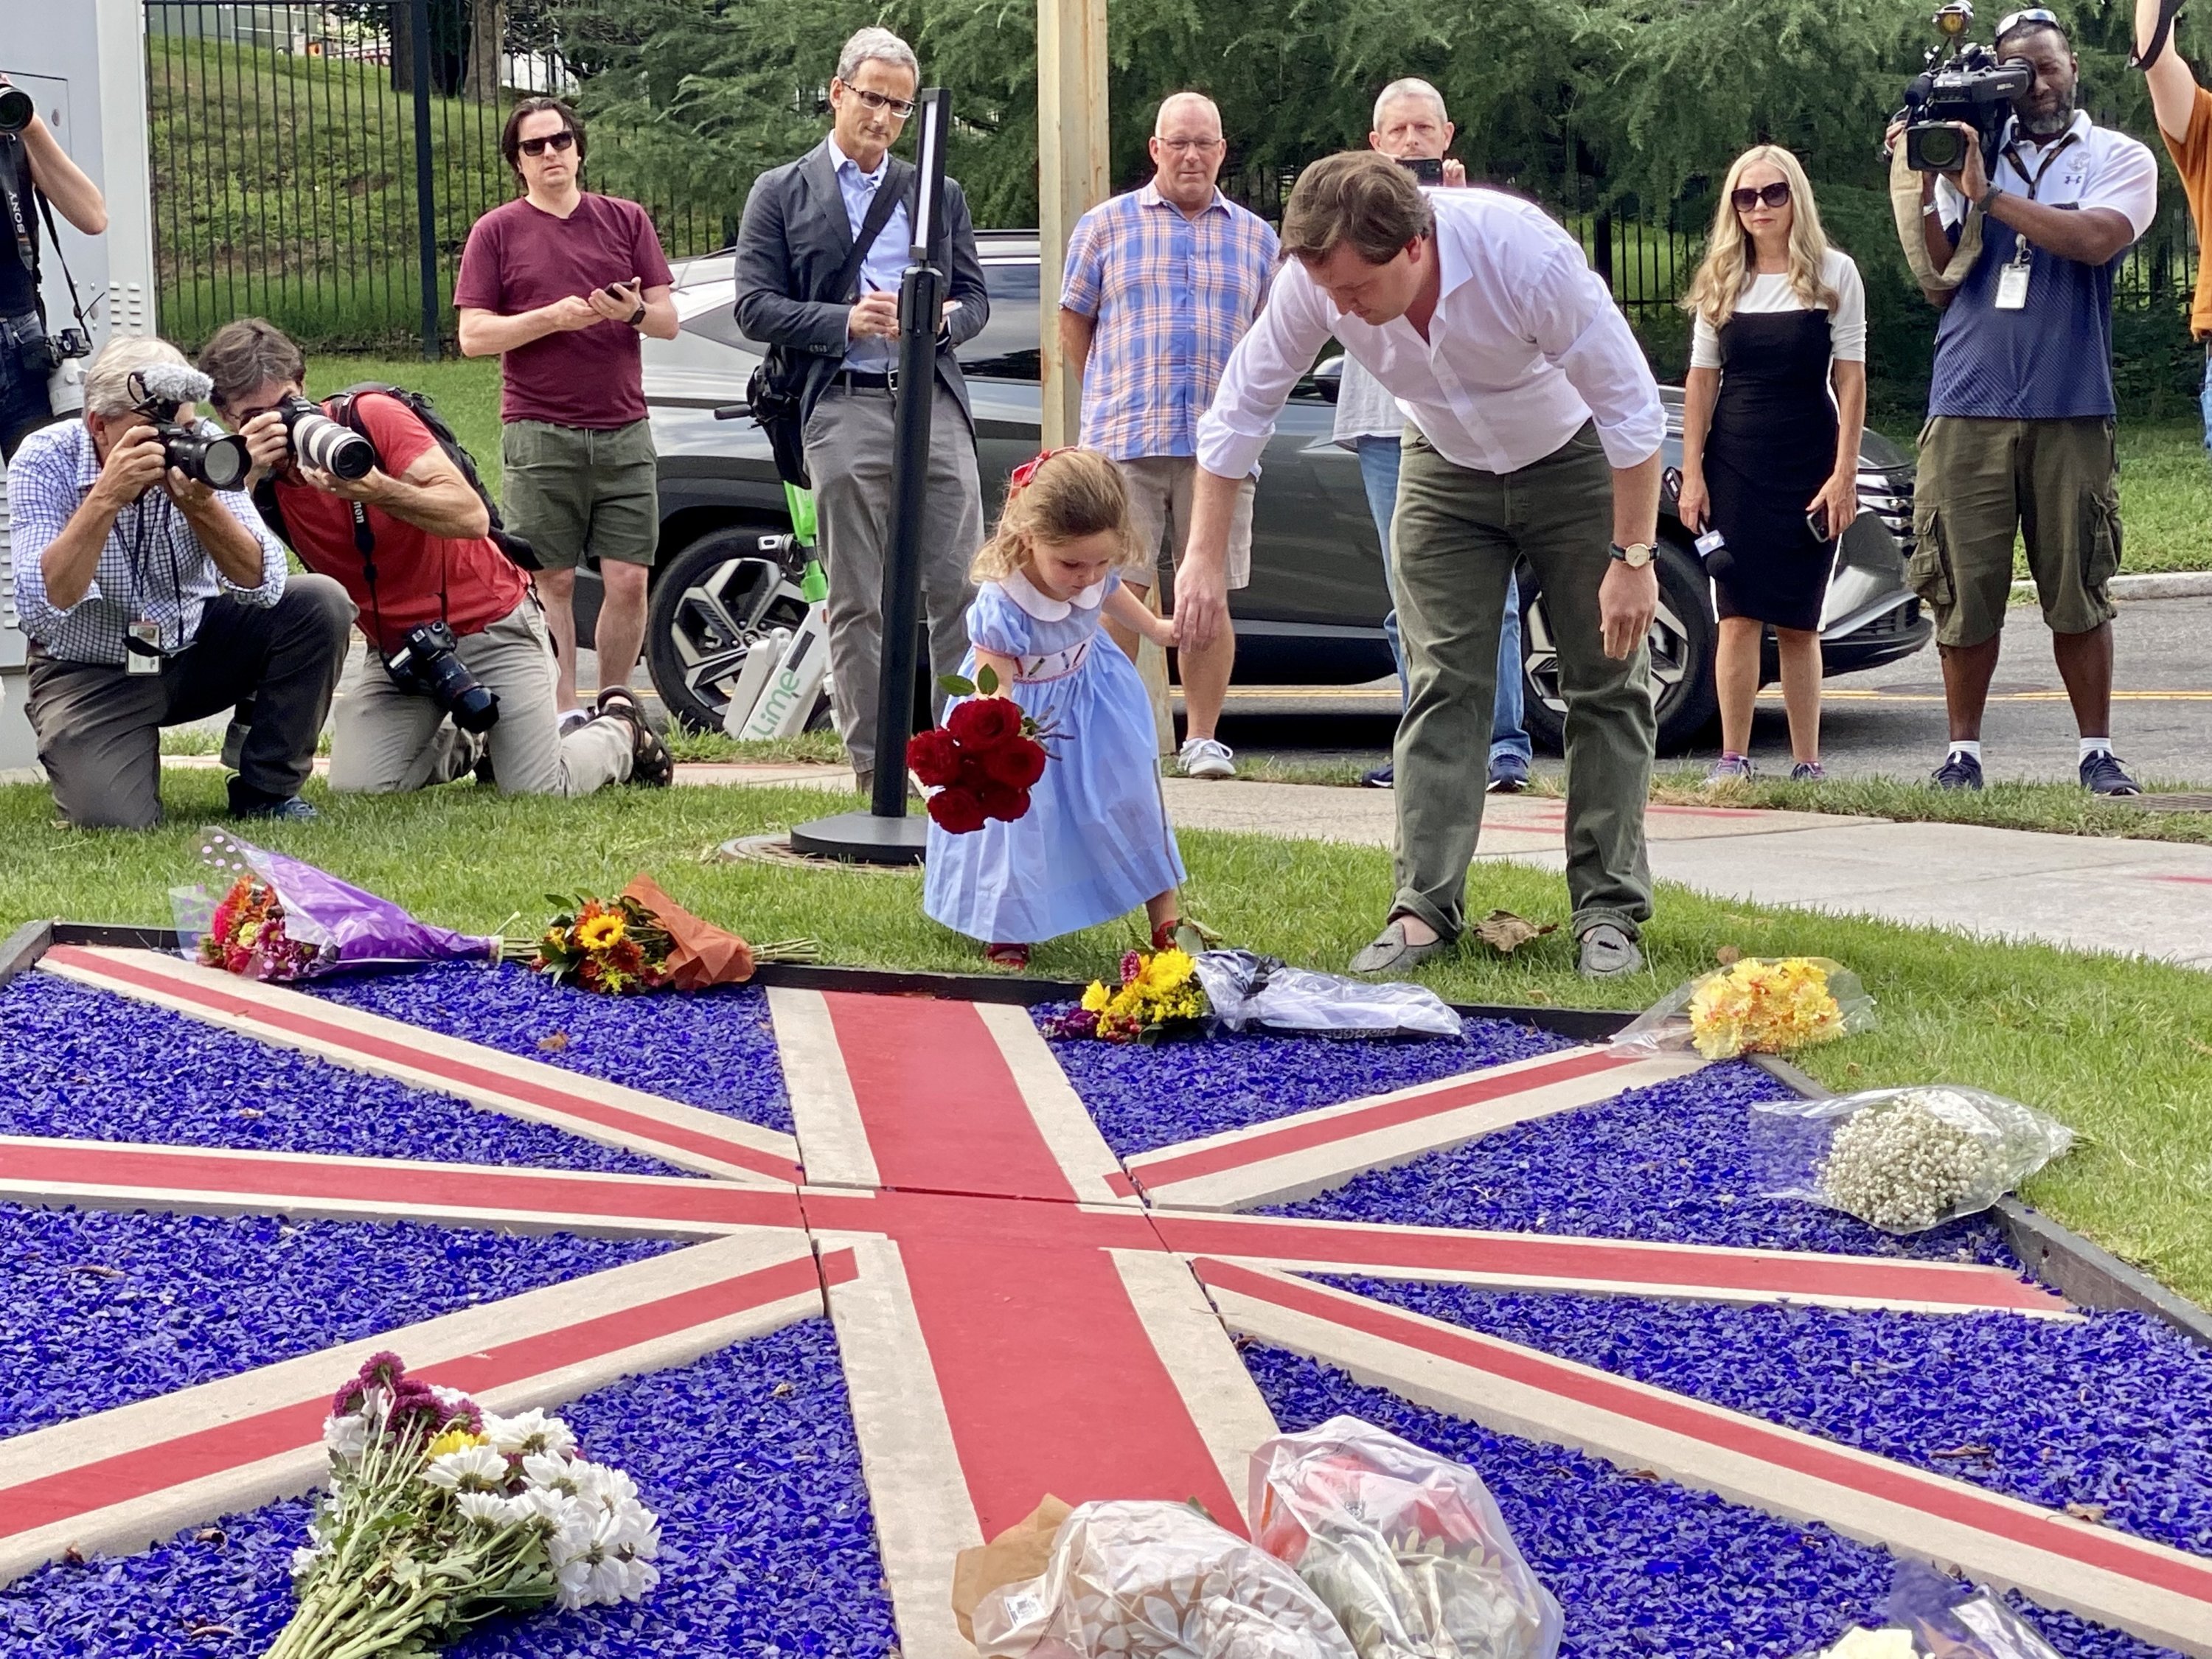 September 8: Bringing flowers to Queen Elizabeth's memorial at the British Embassy. 